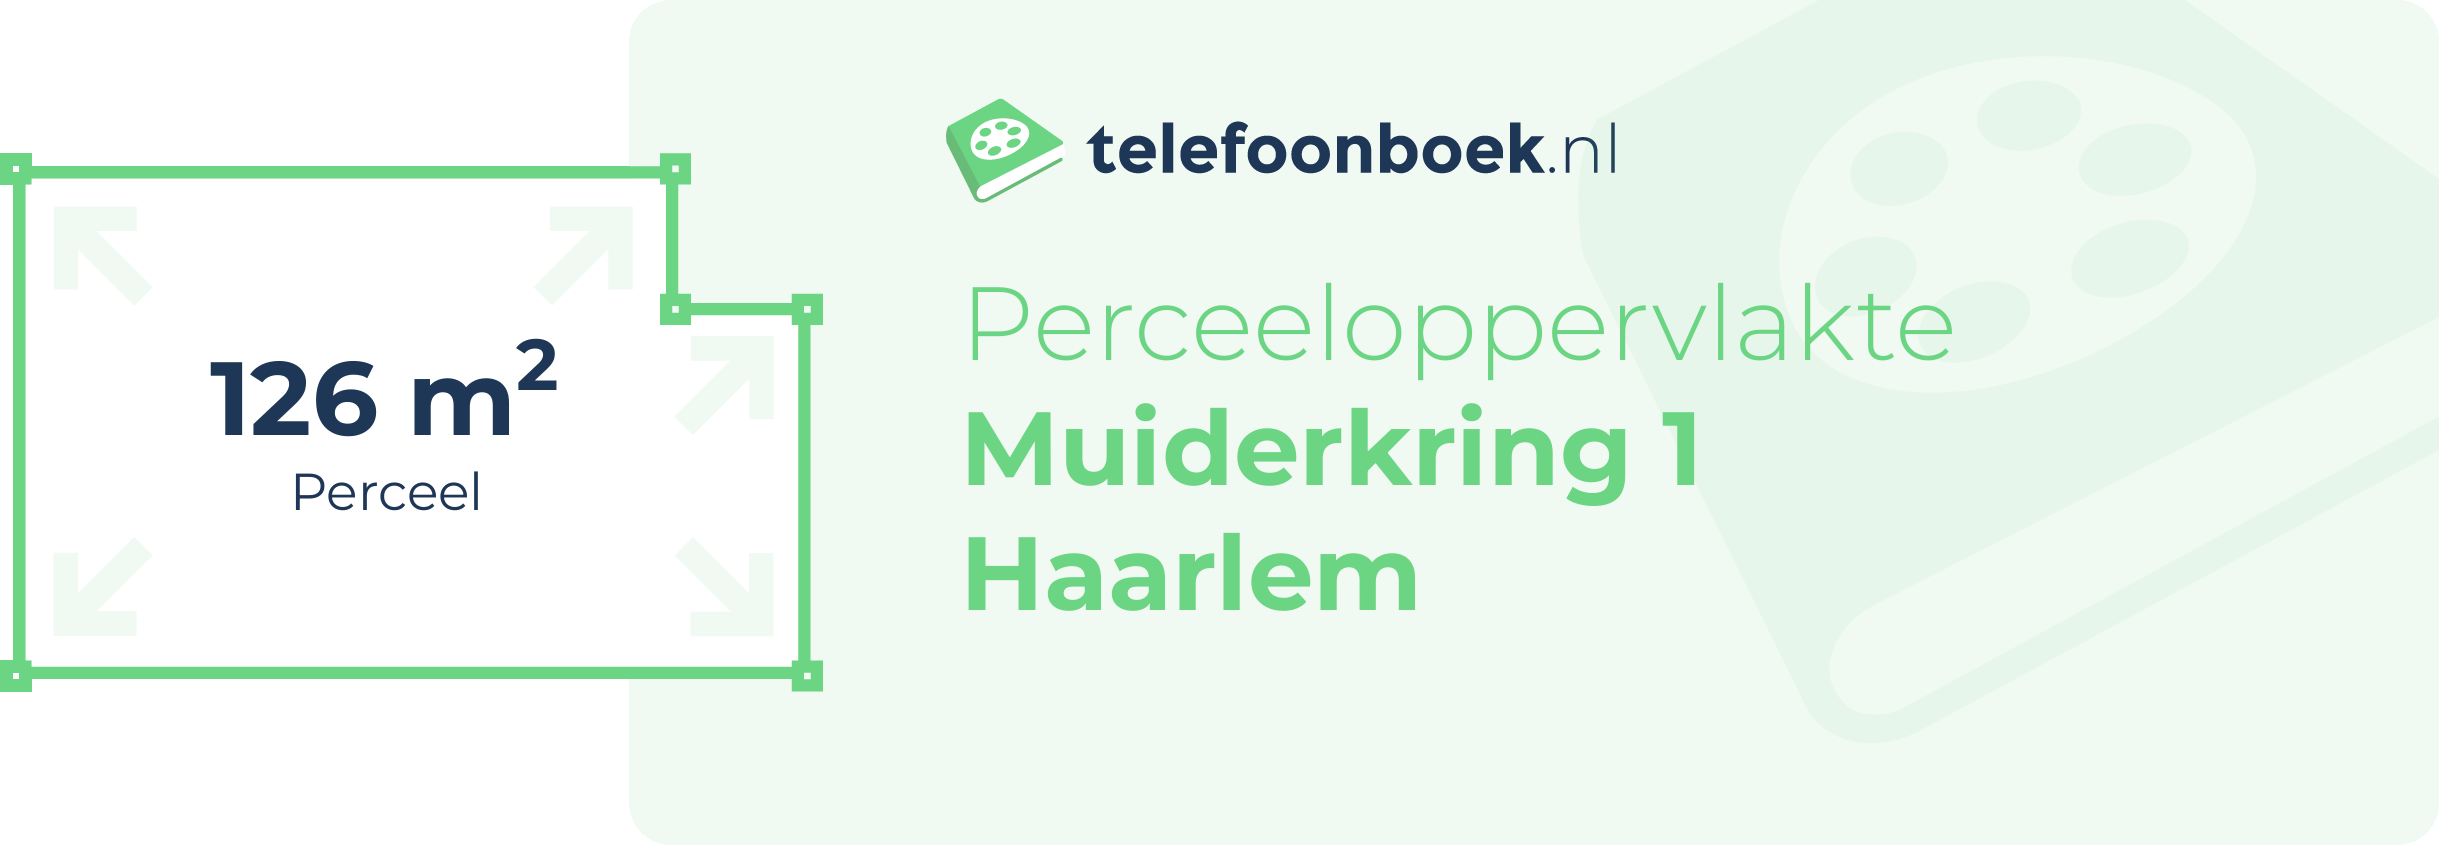 Perceeloppervlakte Muiderkring 1 Haarlem